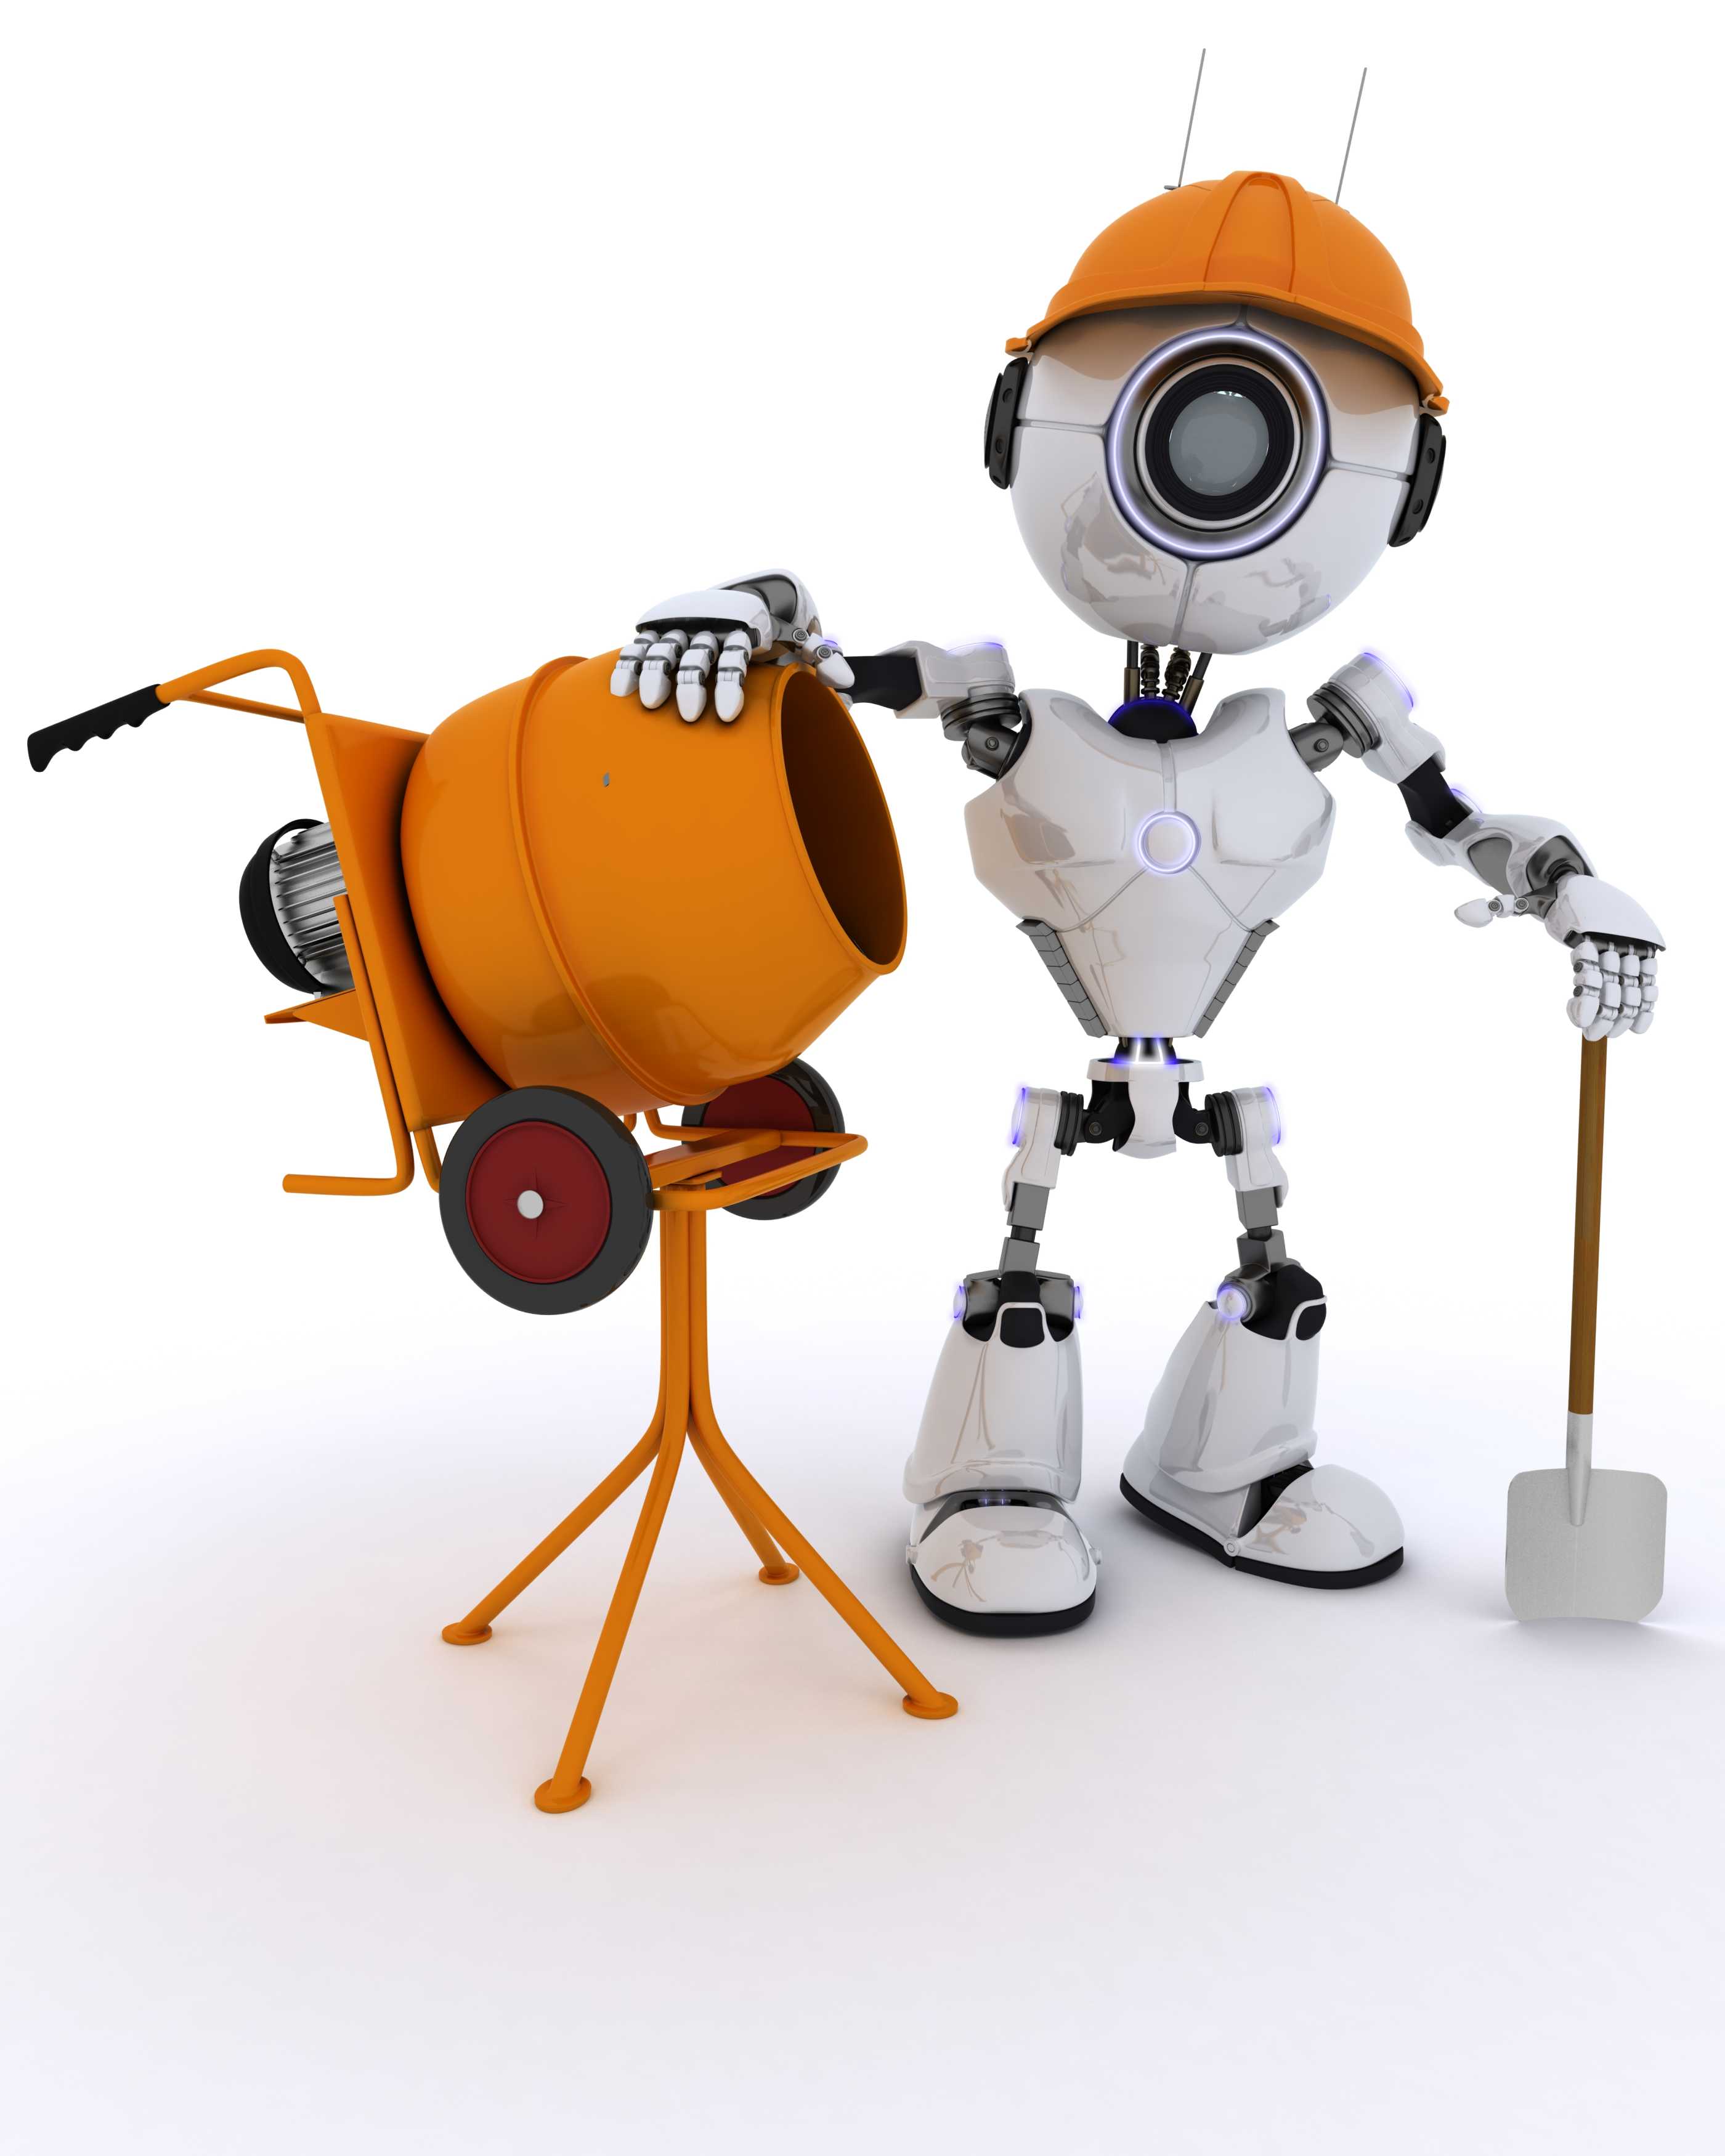 Construction Robot Market